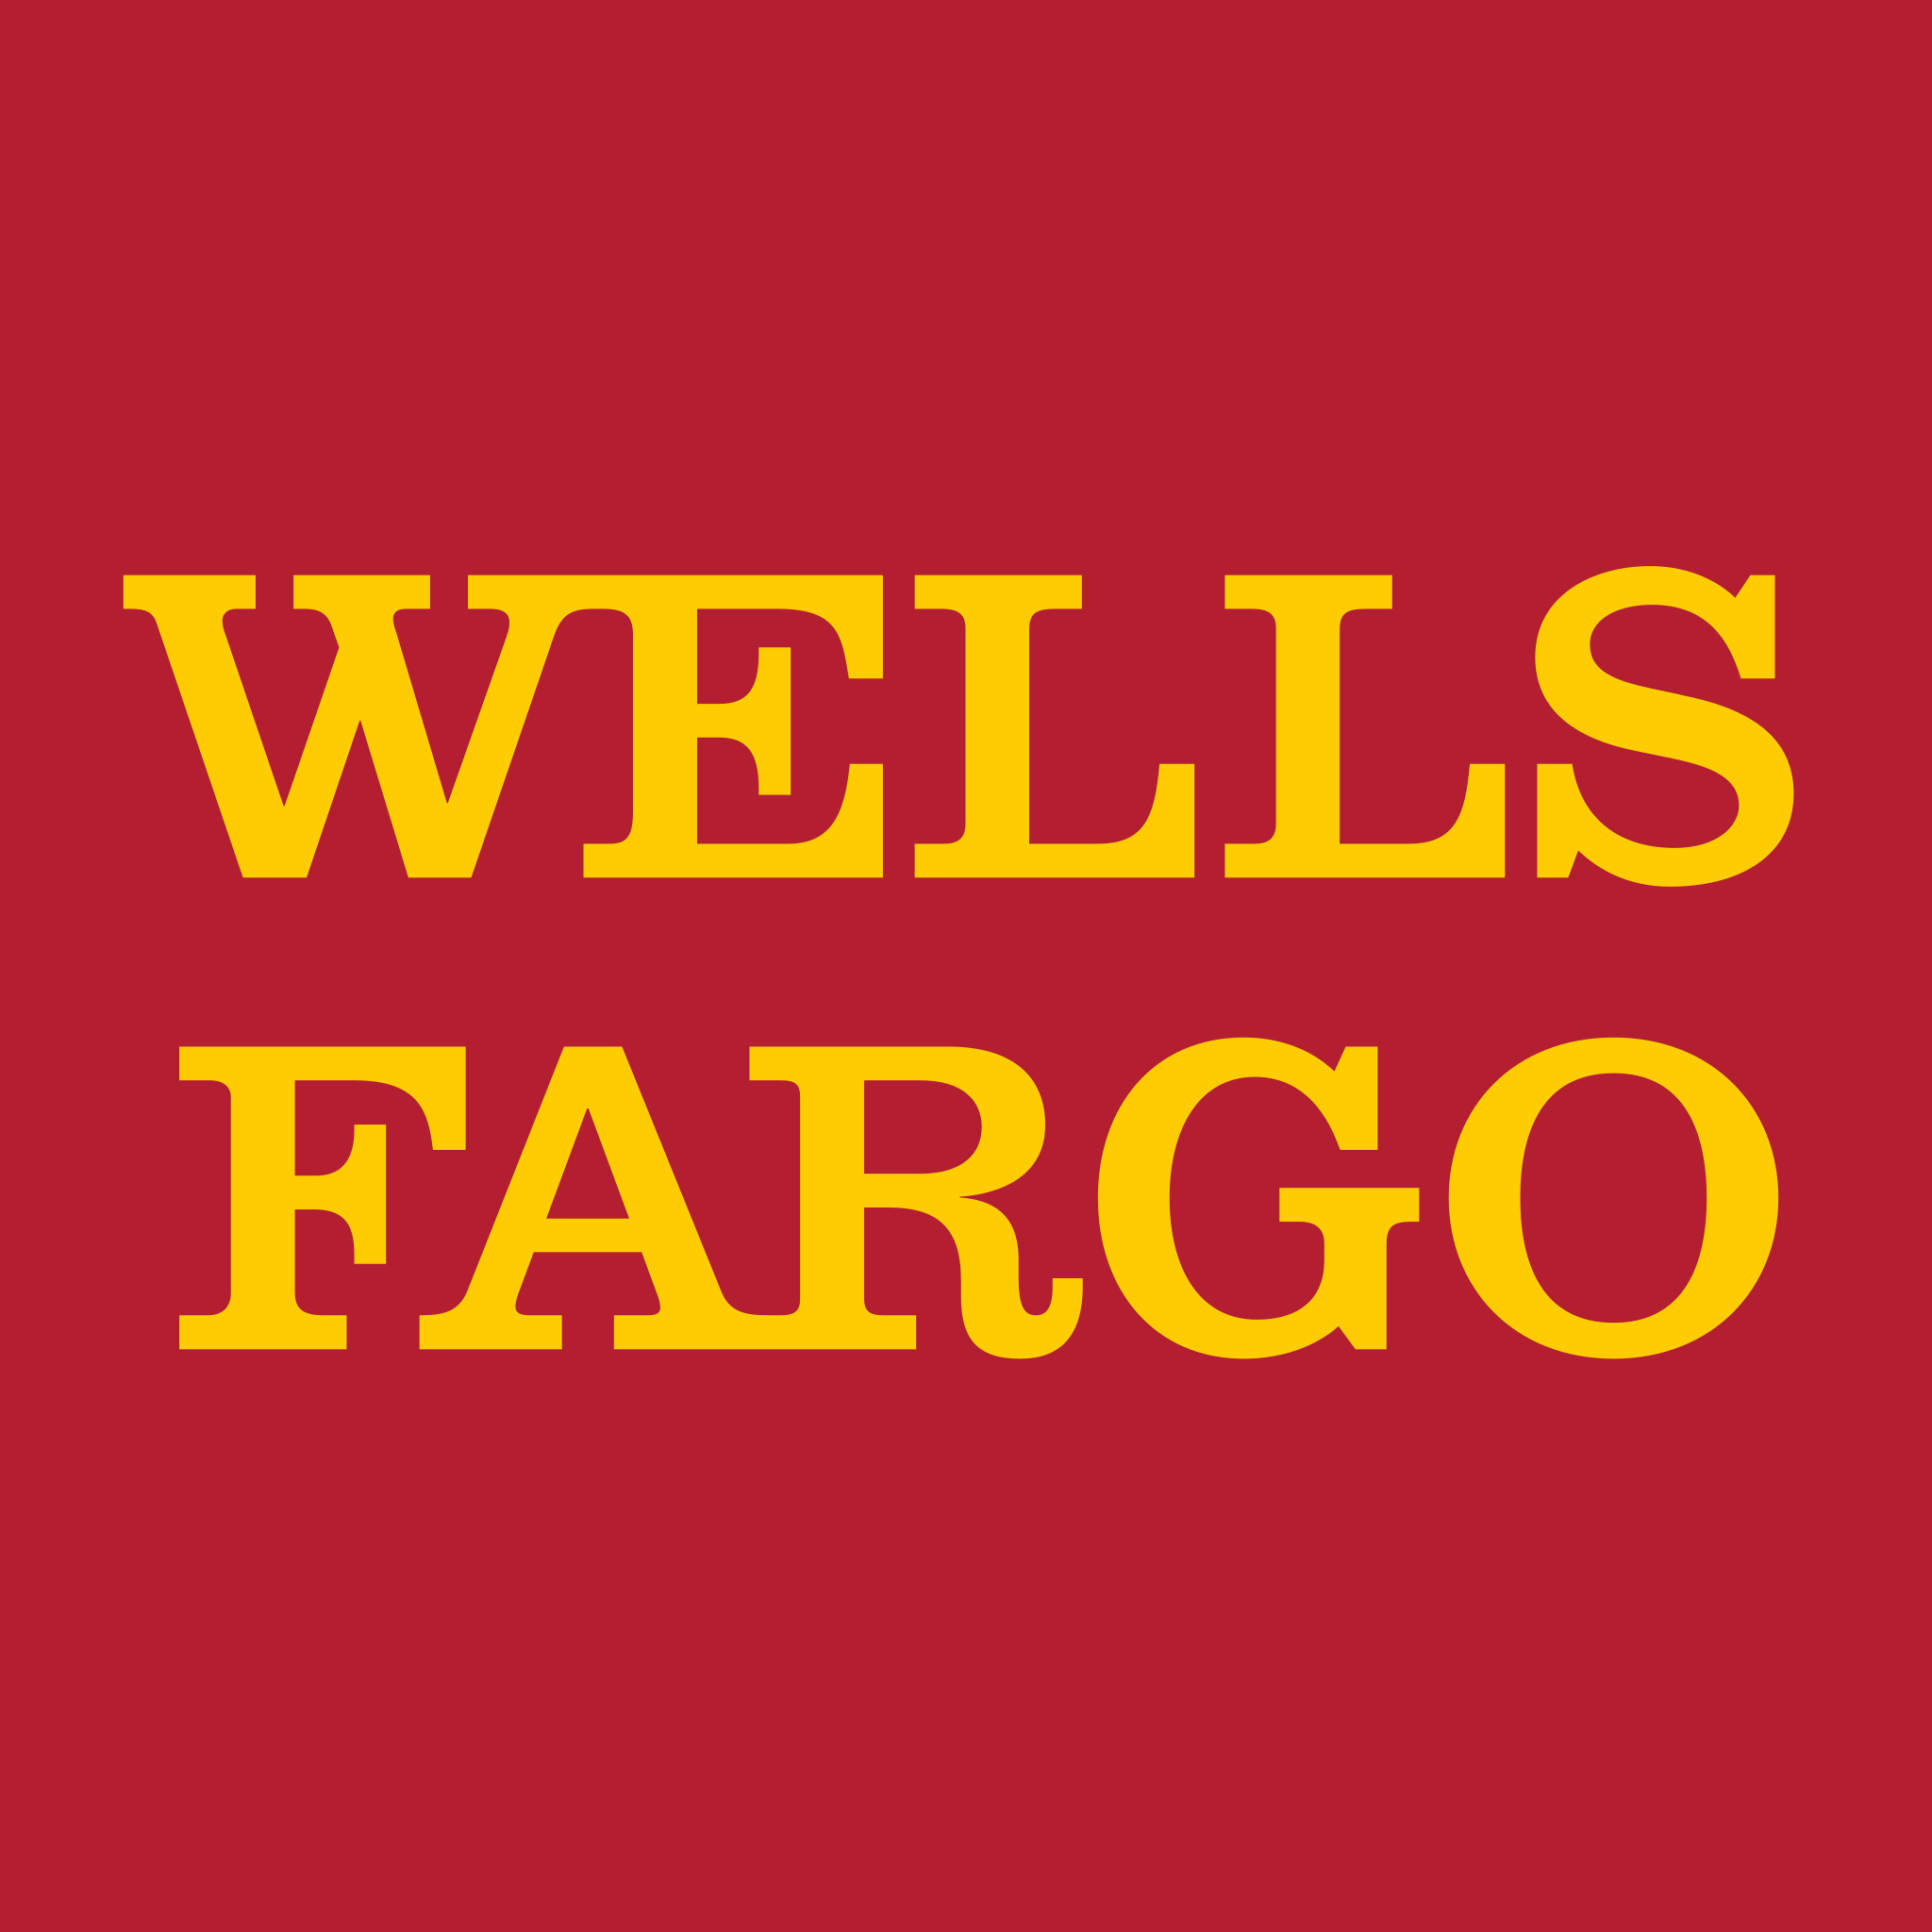 Wells_Fargo_Bank.svg